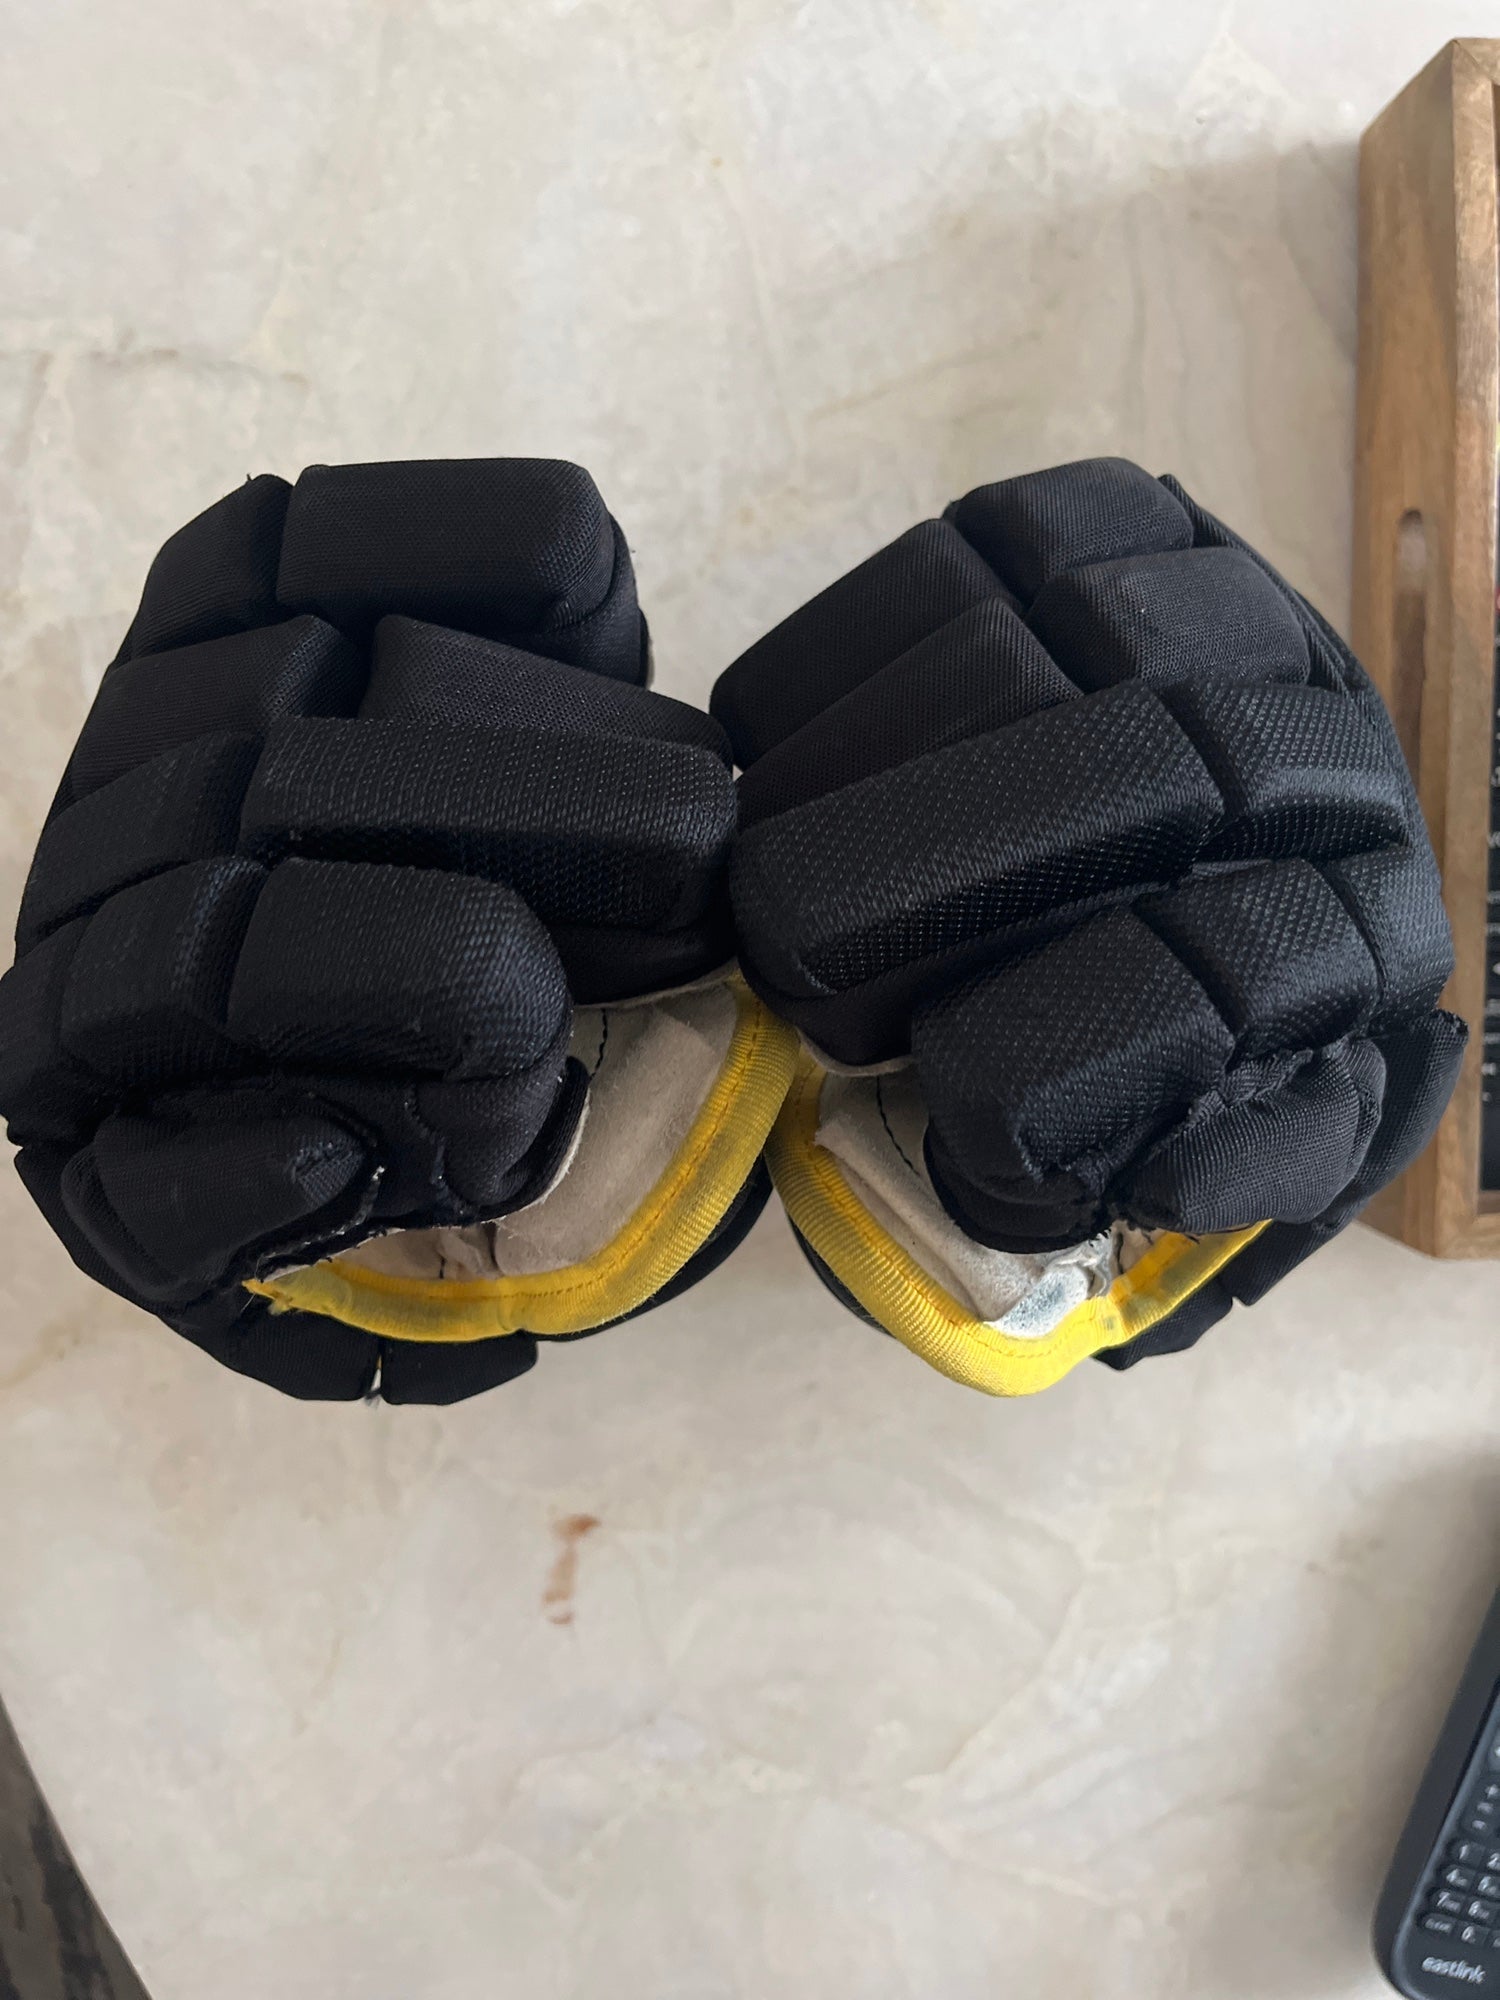 Bauer Custom Team Glove - Senior — Pro Sport Clothing Company